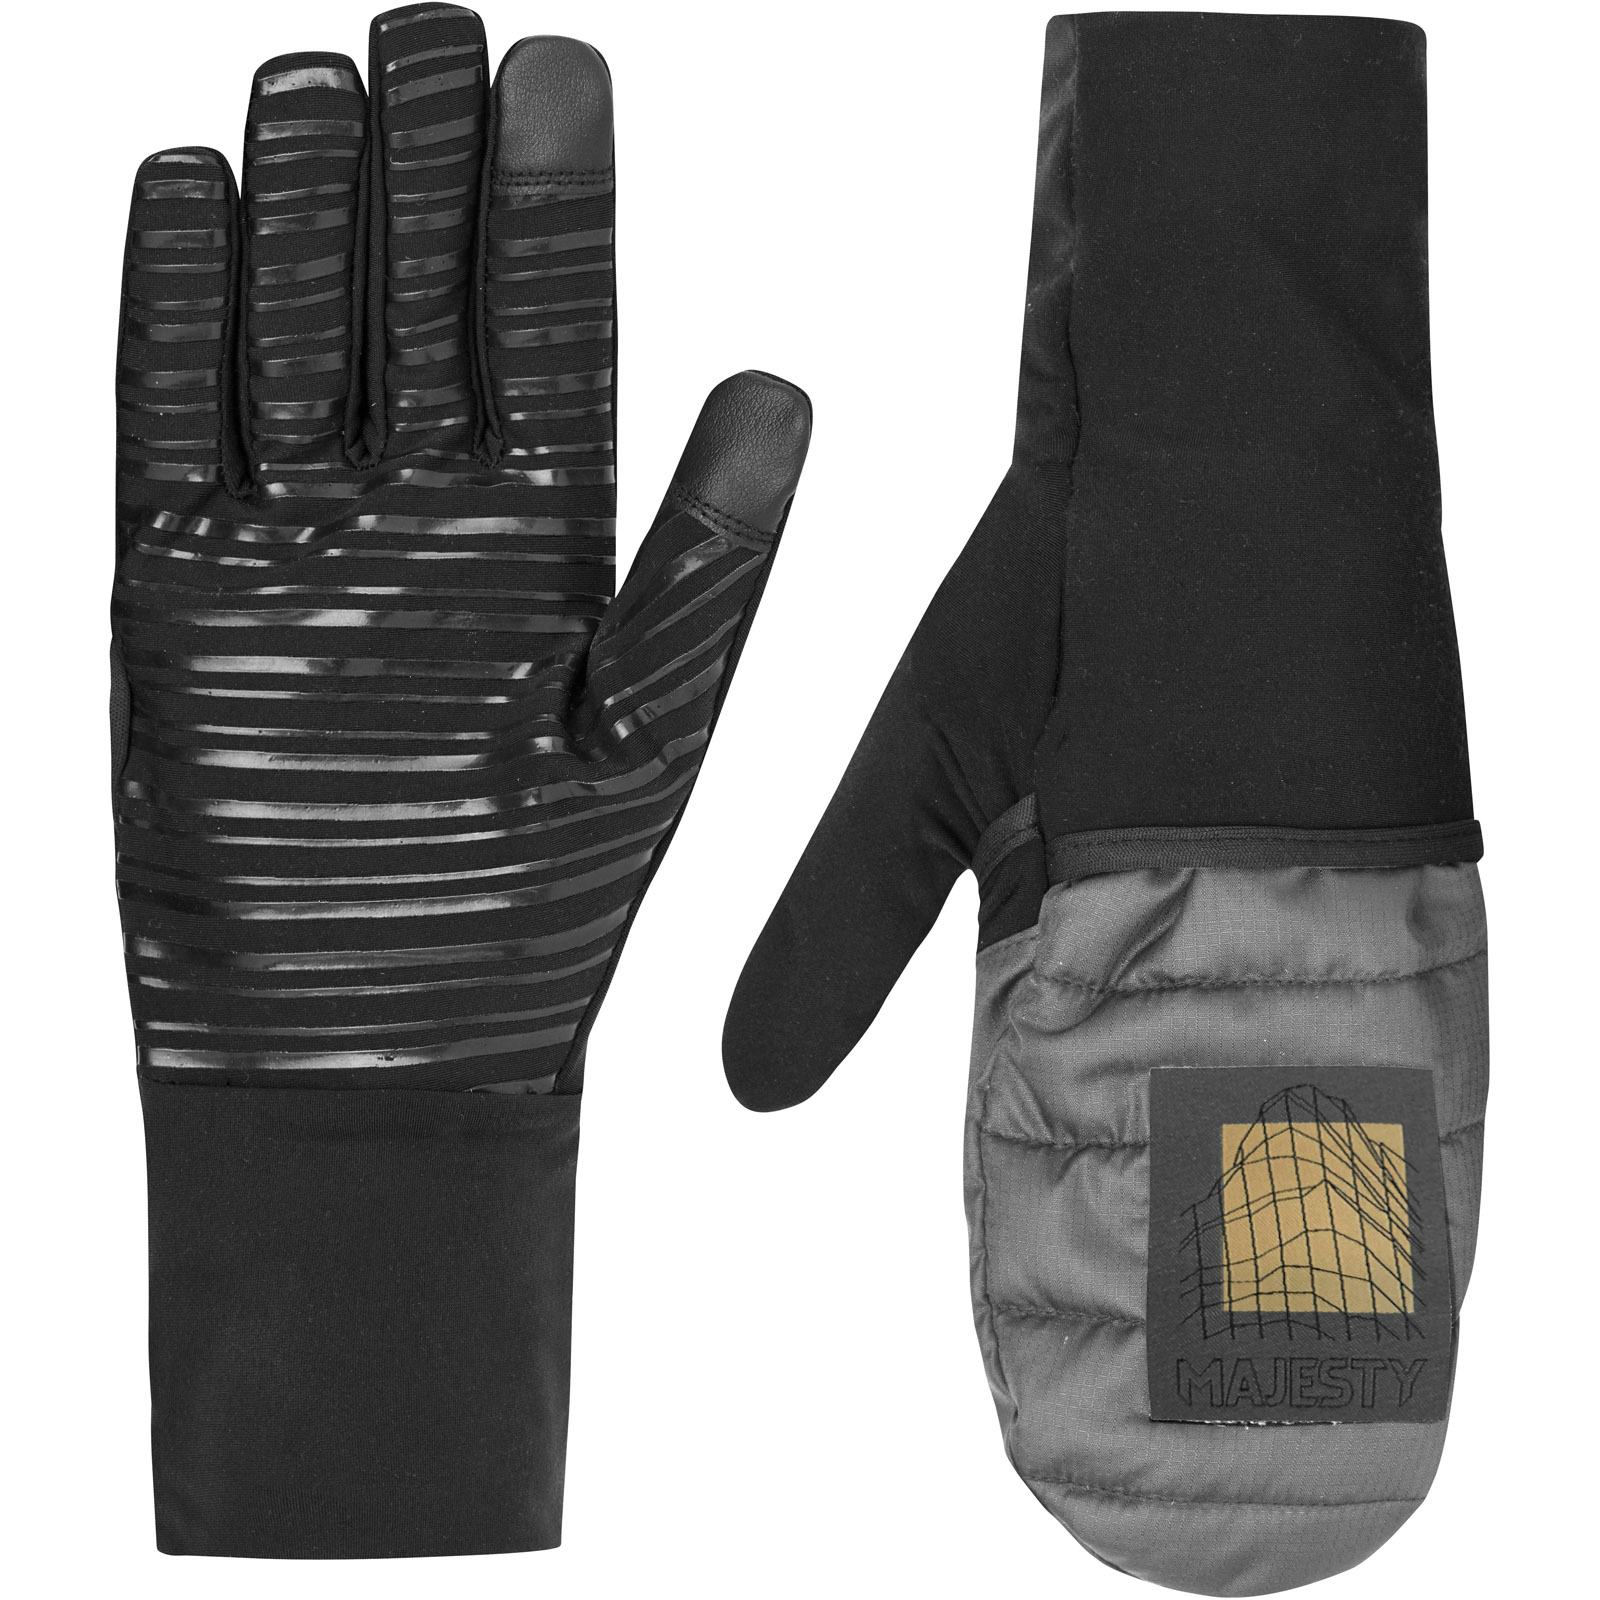 https://shop.majestyskis.com/wp-content/uploads/2022/05/vagabond-gloves-1.jpg